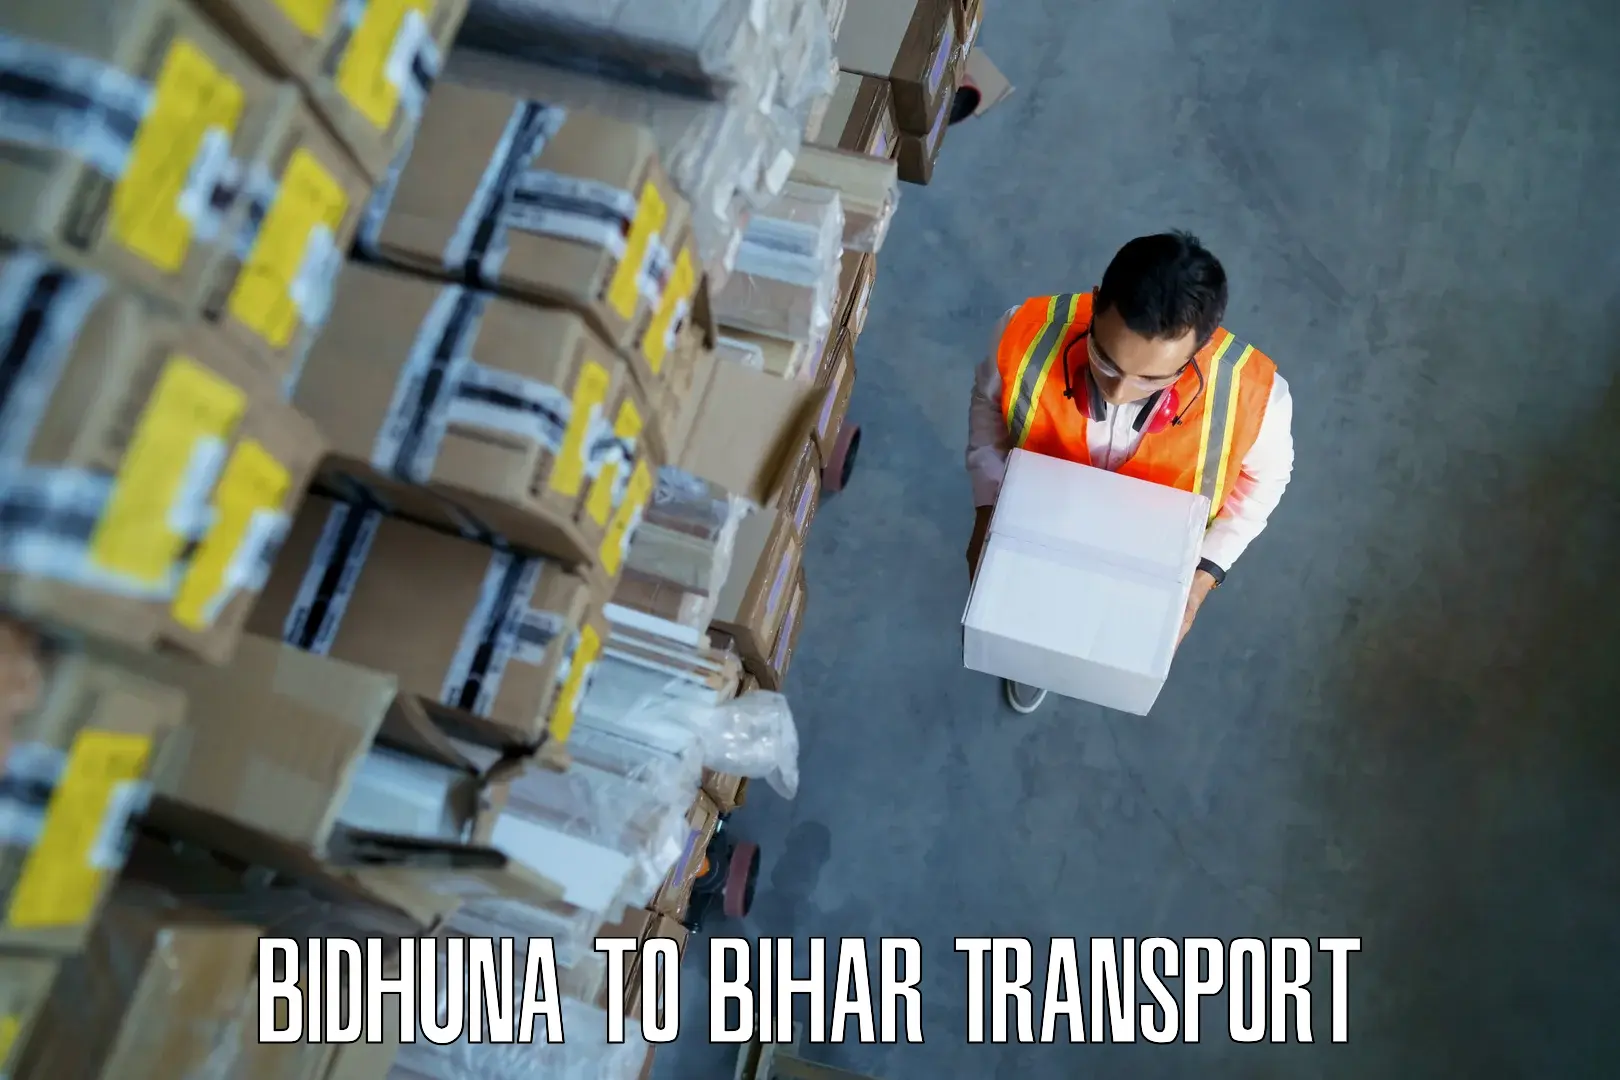 Shipping partner Bidhuna to Bihar